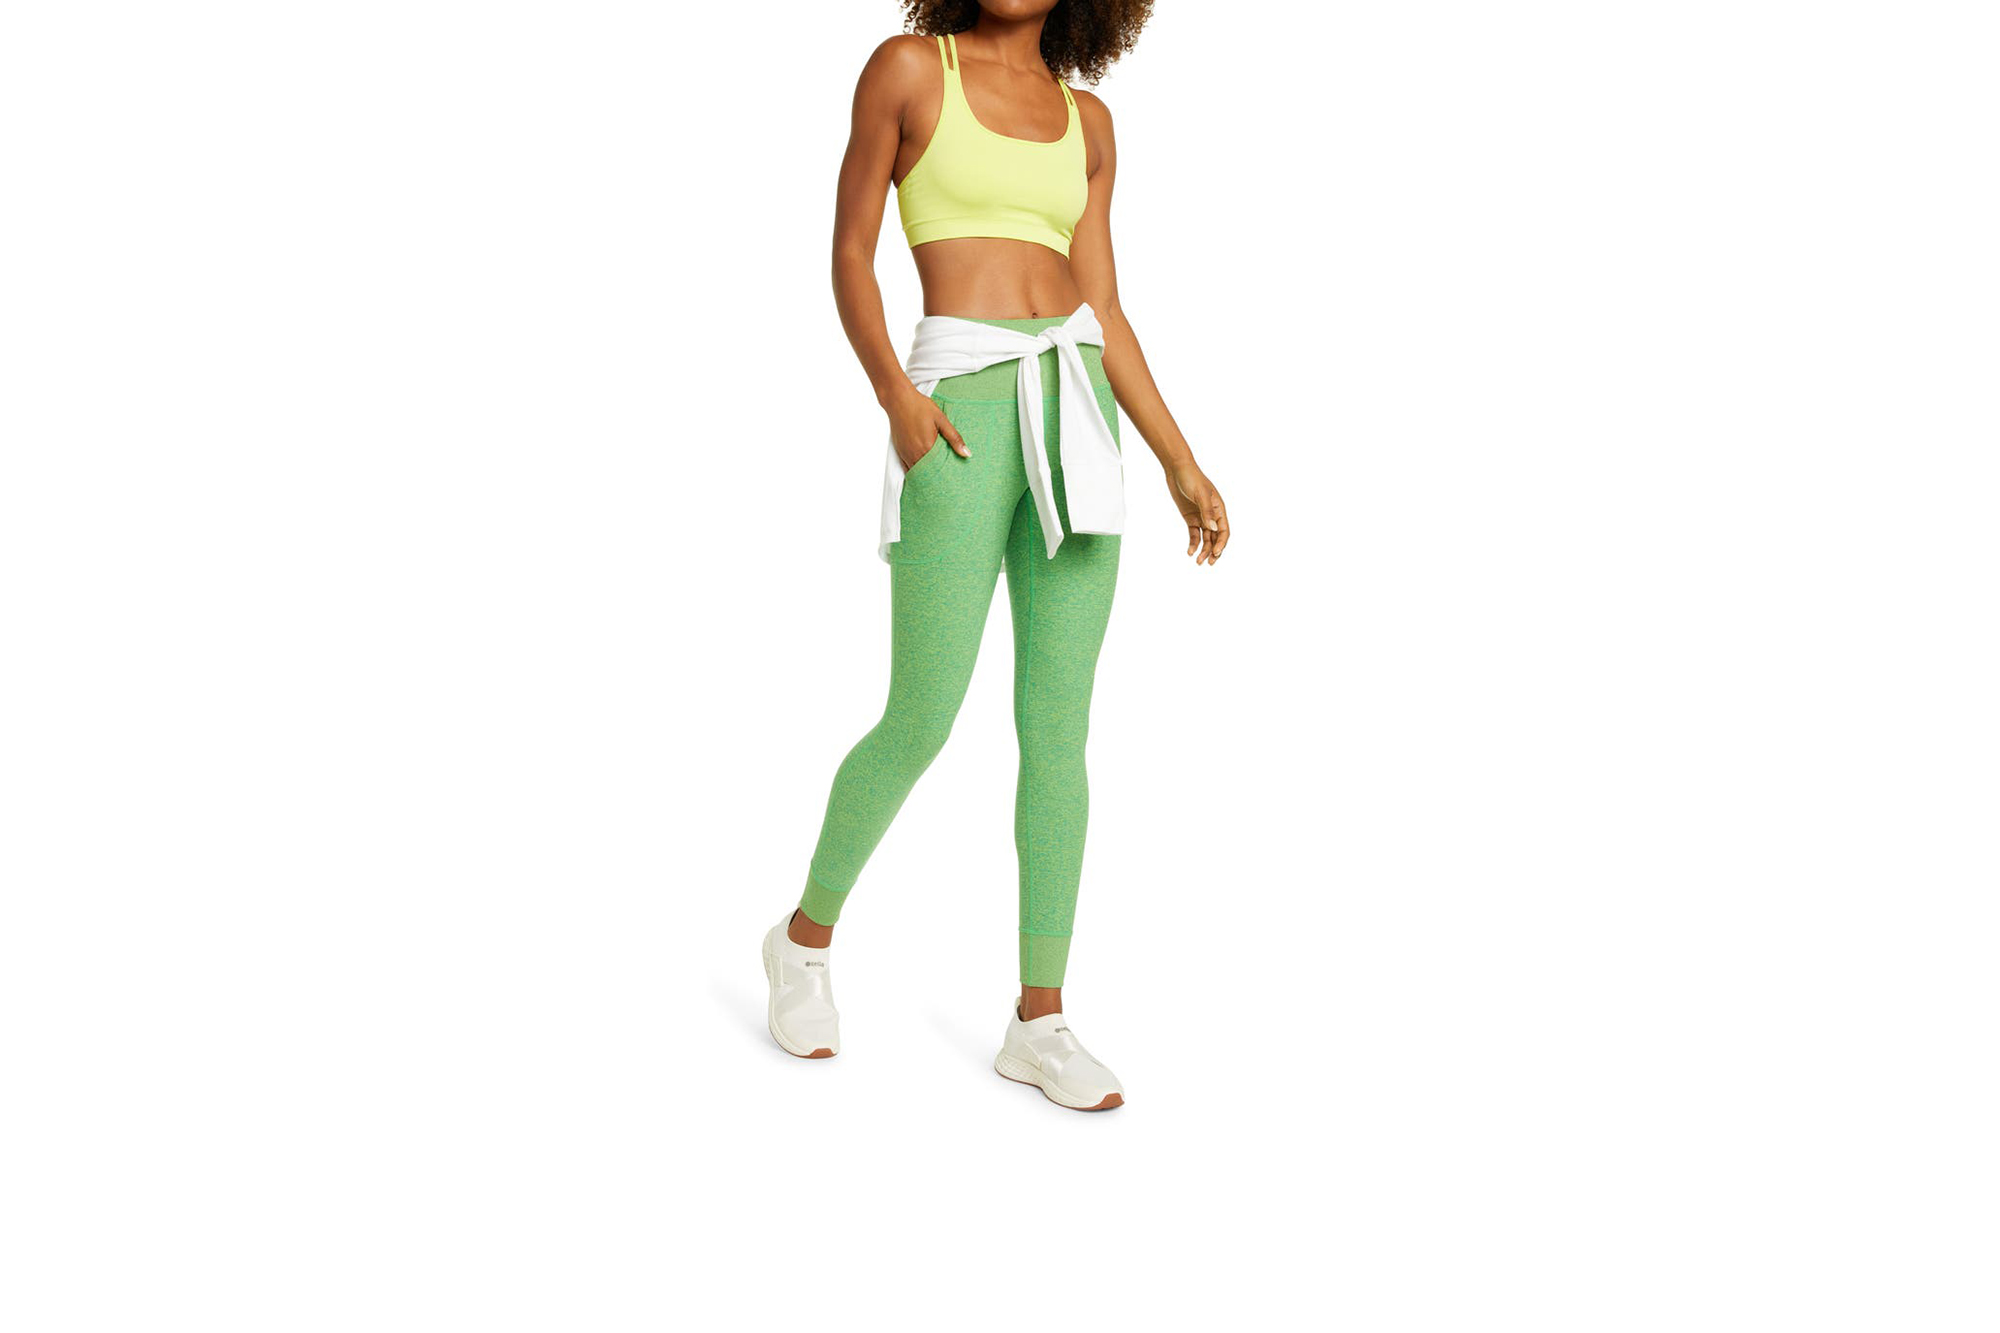 https://www.usmagazine.com/wp-content/uploads/2022/04/green-leggings-pockets.jpg?quality=86&strip=all